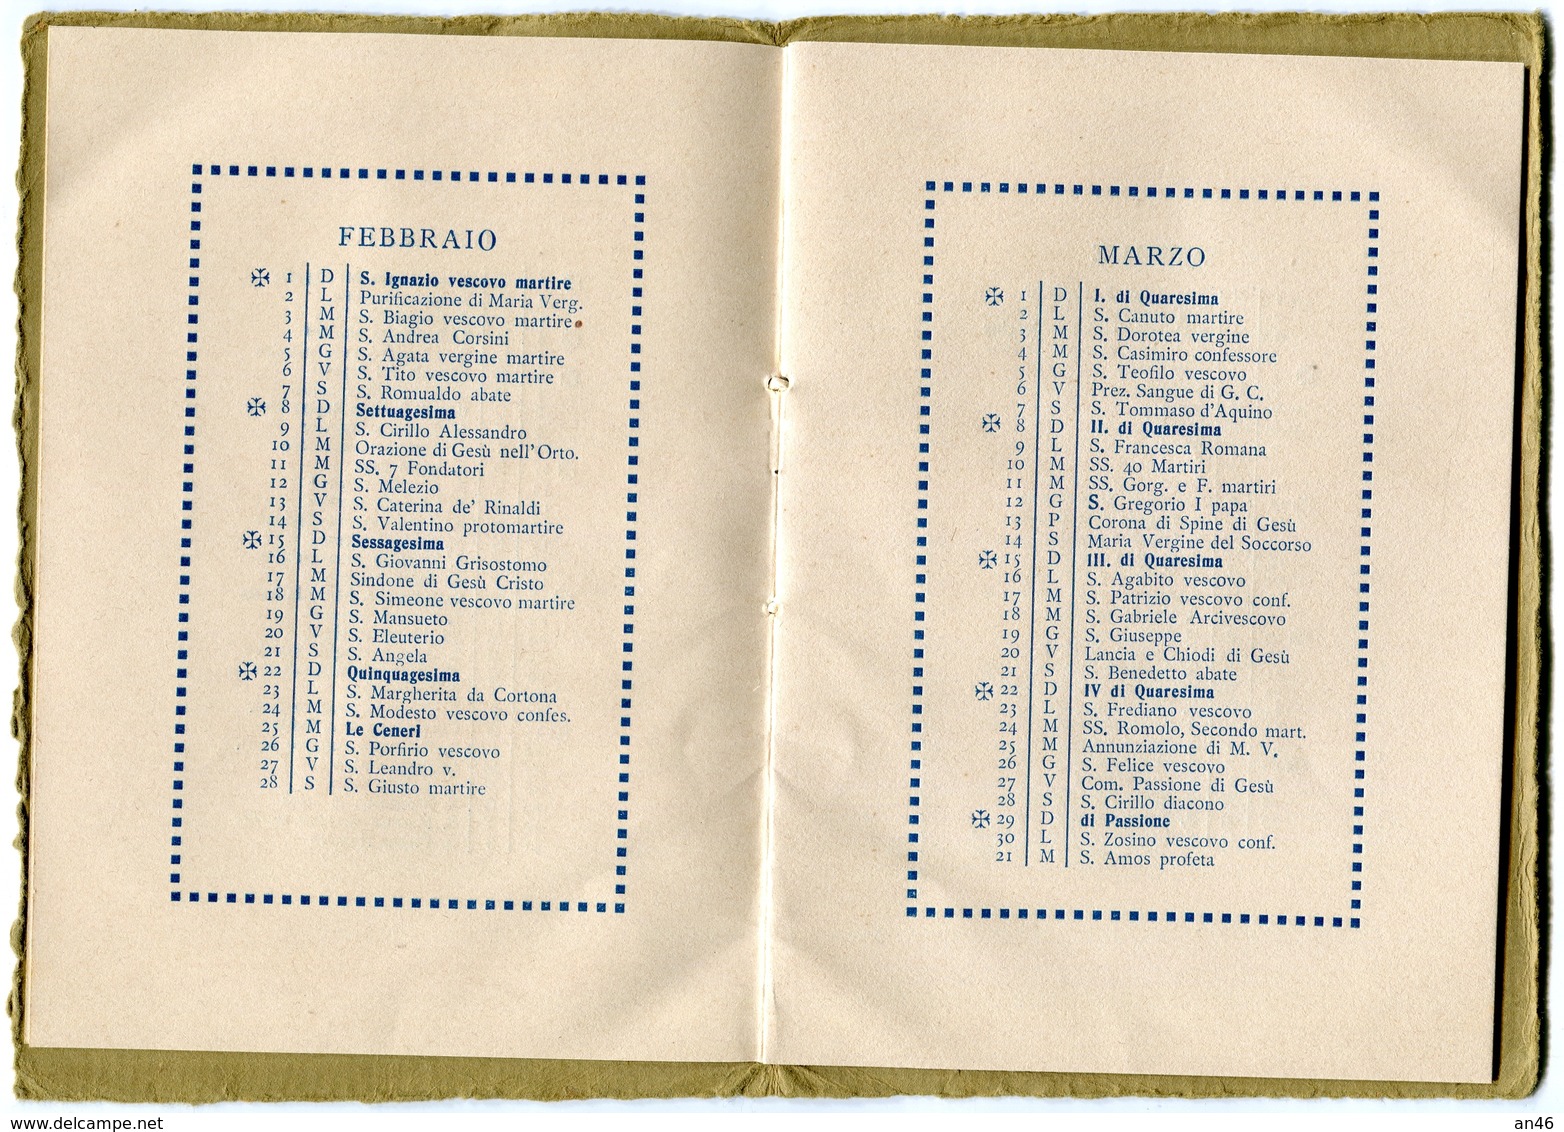 Calendario-Calendarietto-Calendrier-Kalender-Calendar-"Regia Accademia Navale 1914" Integra E Originale 100% - Tamaño Grande : 1901-20